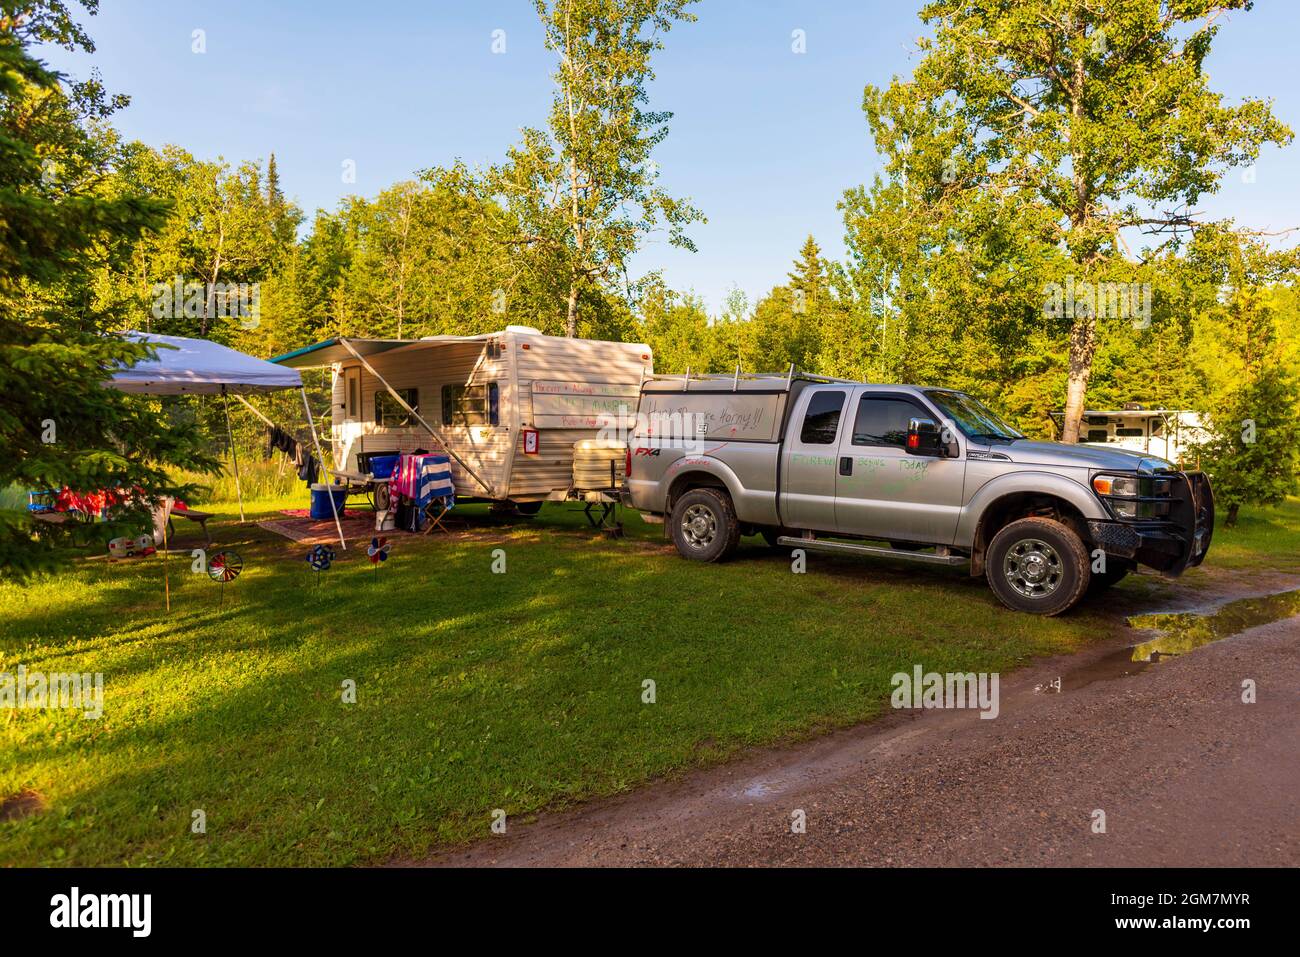 Cheboygan, MI - Juli 13: Wedding Camper and Truck with Just Married Signage, Cheboygan, MI am 13. Juli 2021. Stockfoto